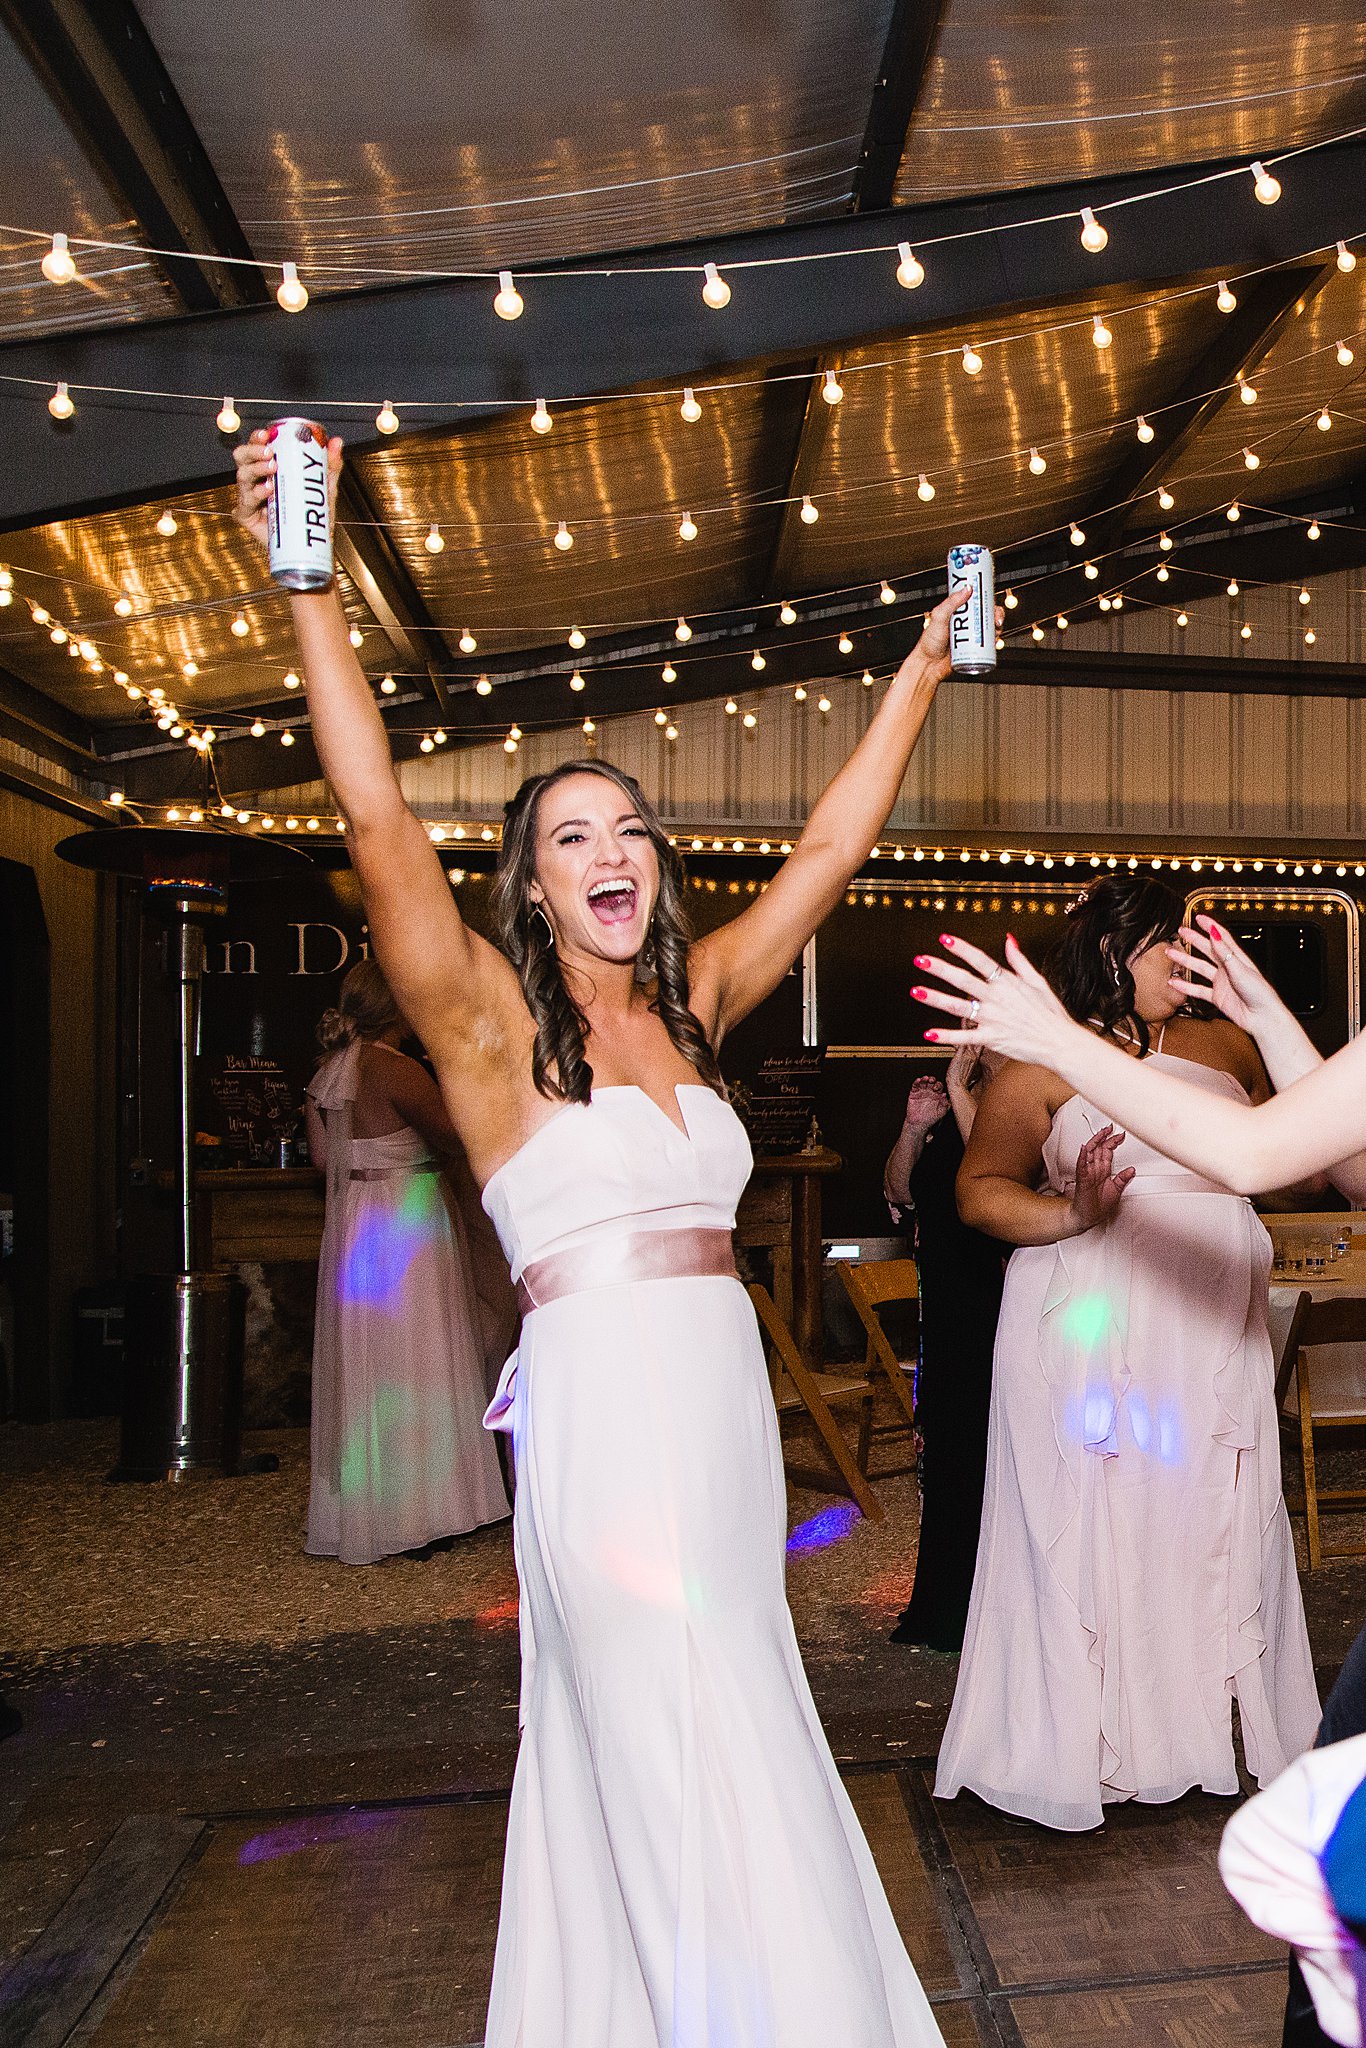 Guests dancing at a Van Dickson Ranch wedding reception by Arizona weding photographer PMA Photography.